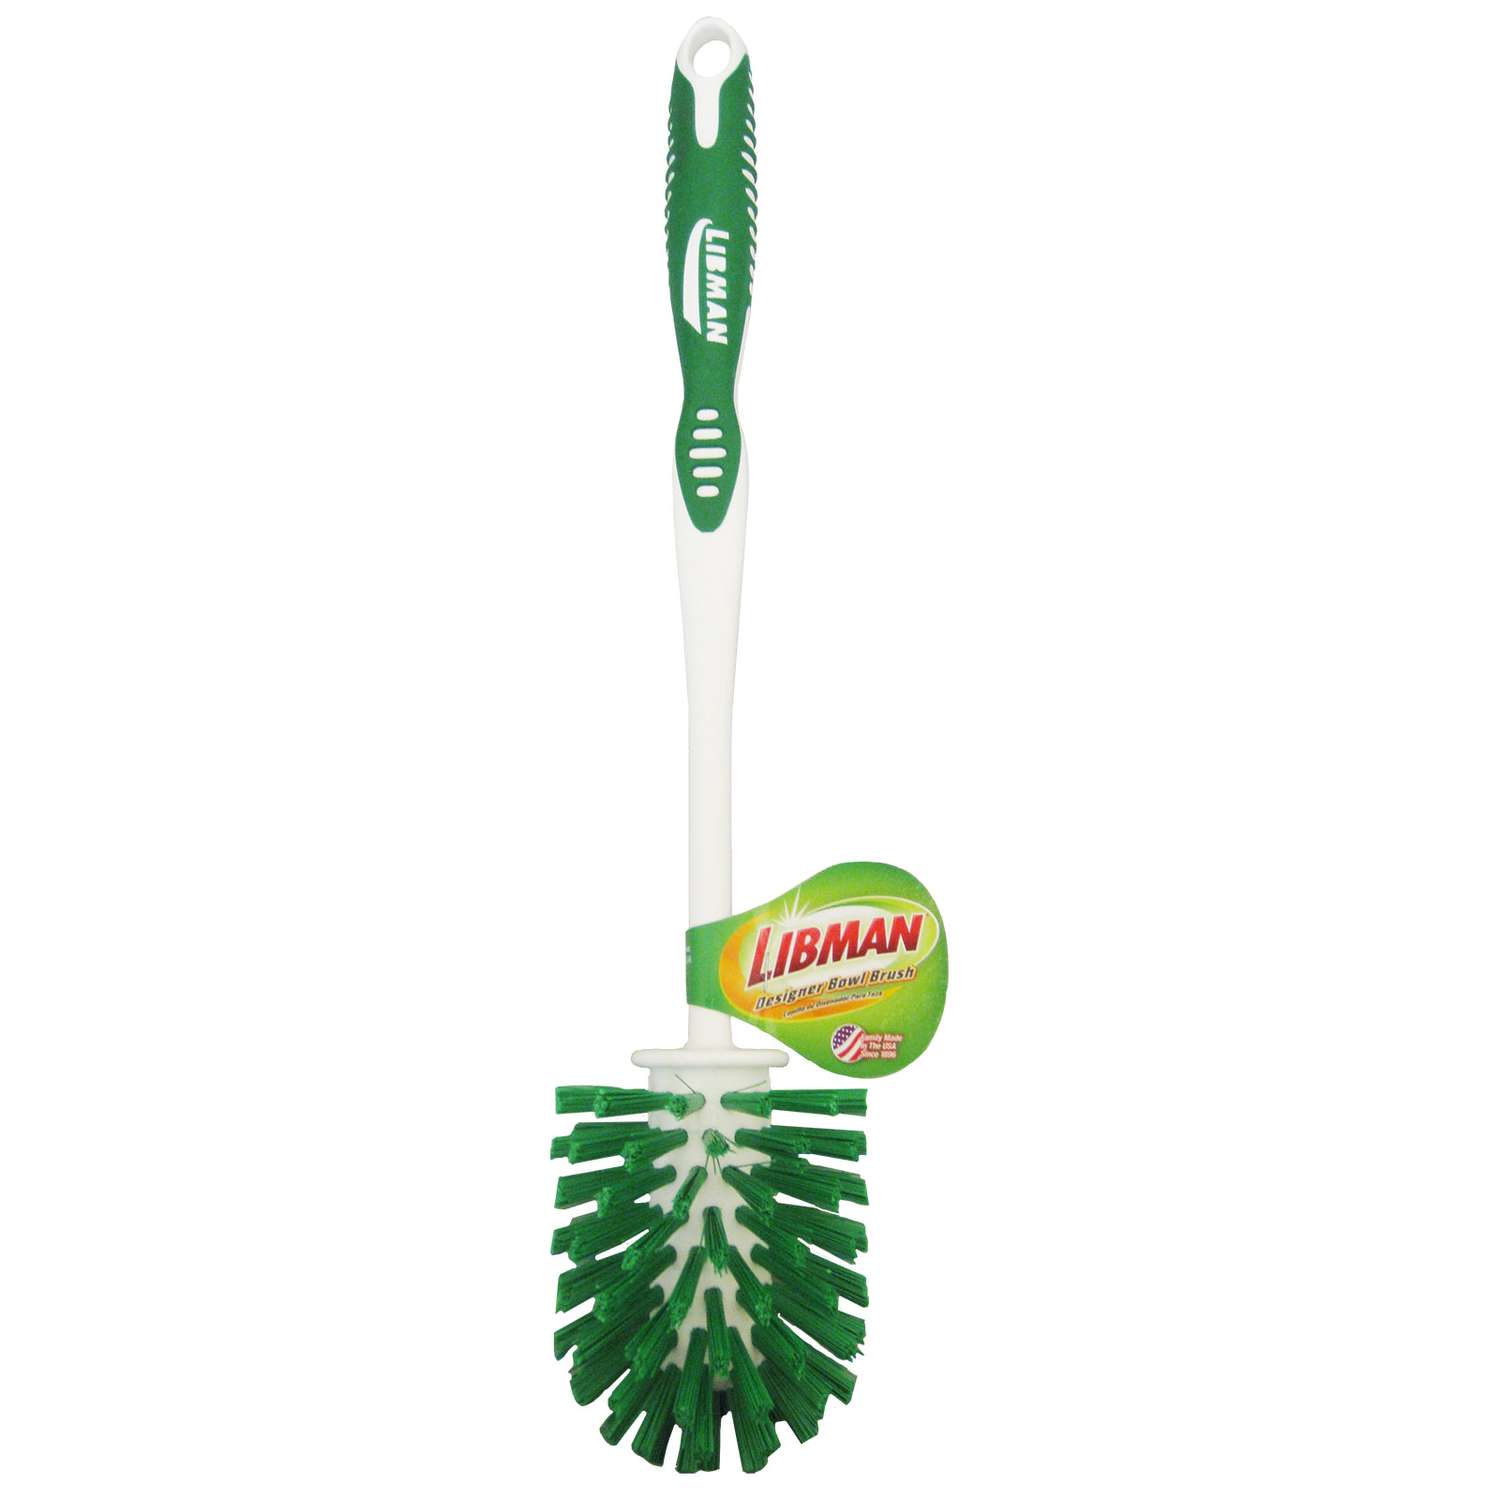 Libman Kitchen Brush - Green, Dish Brush with No Slip Rubber